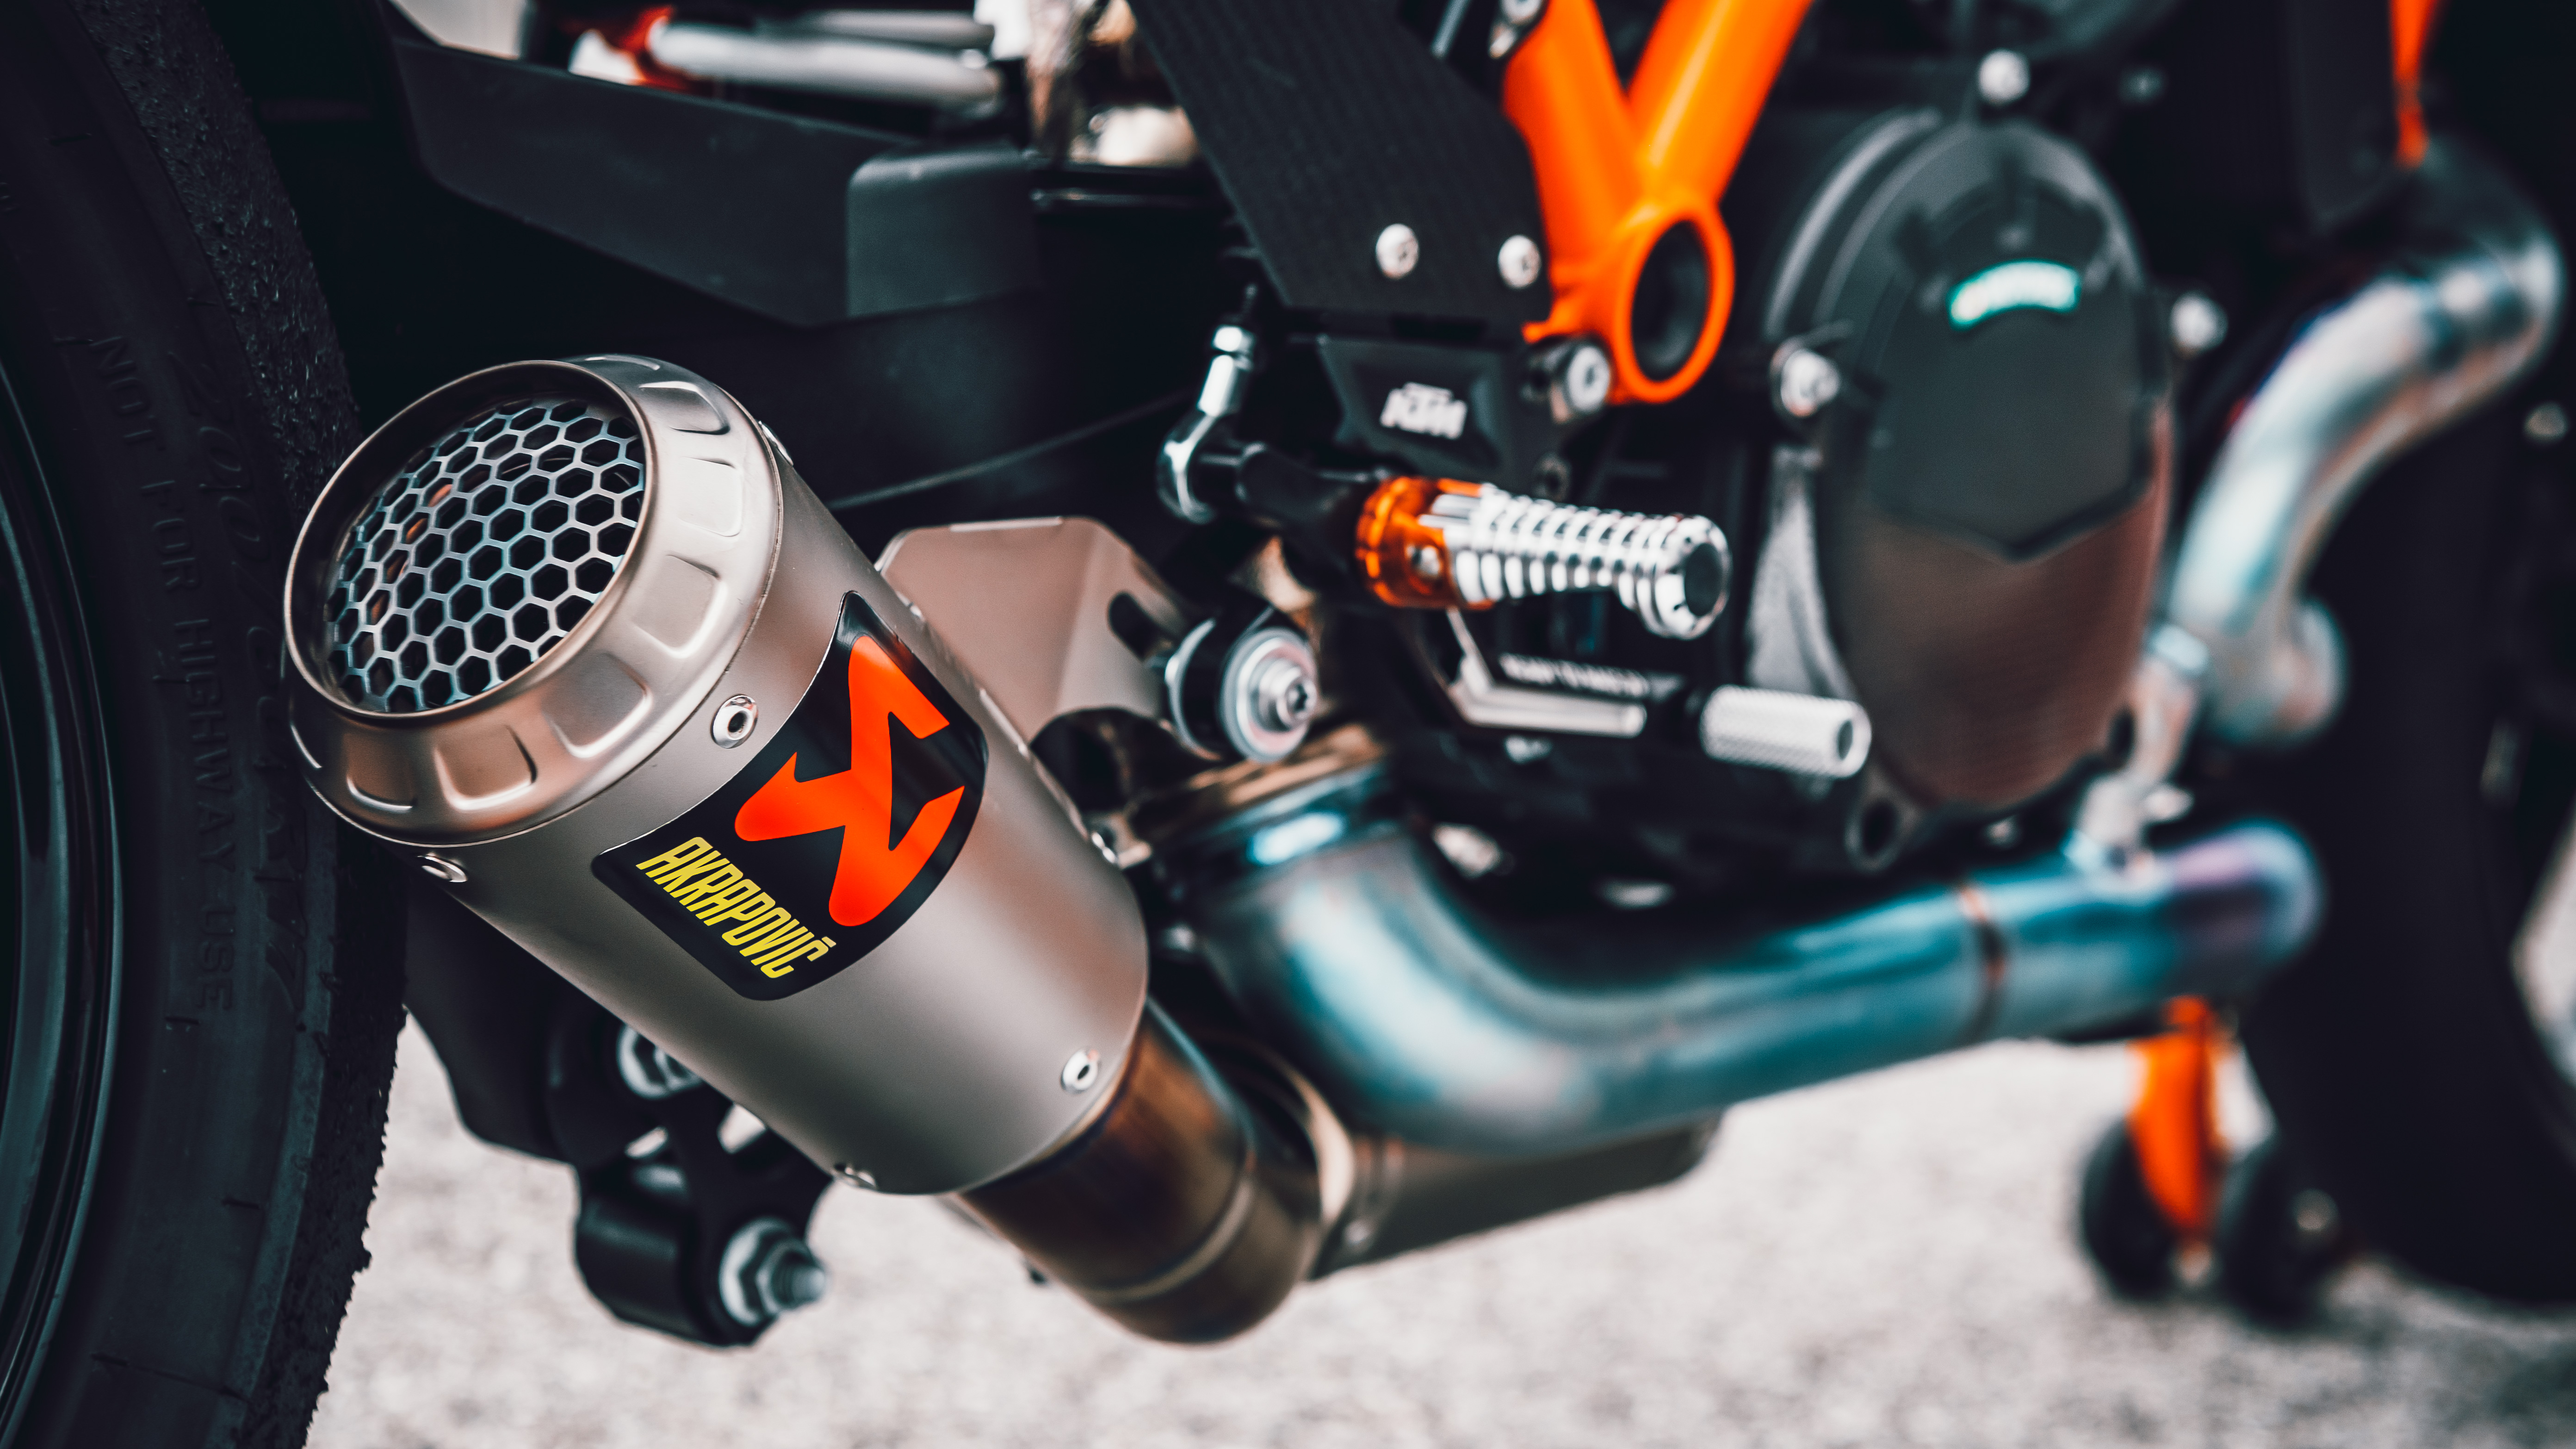 2020 KTM Super Duke R for sale. Akra race exhaust, full carbon kit, BST  Carbon wheels